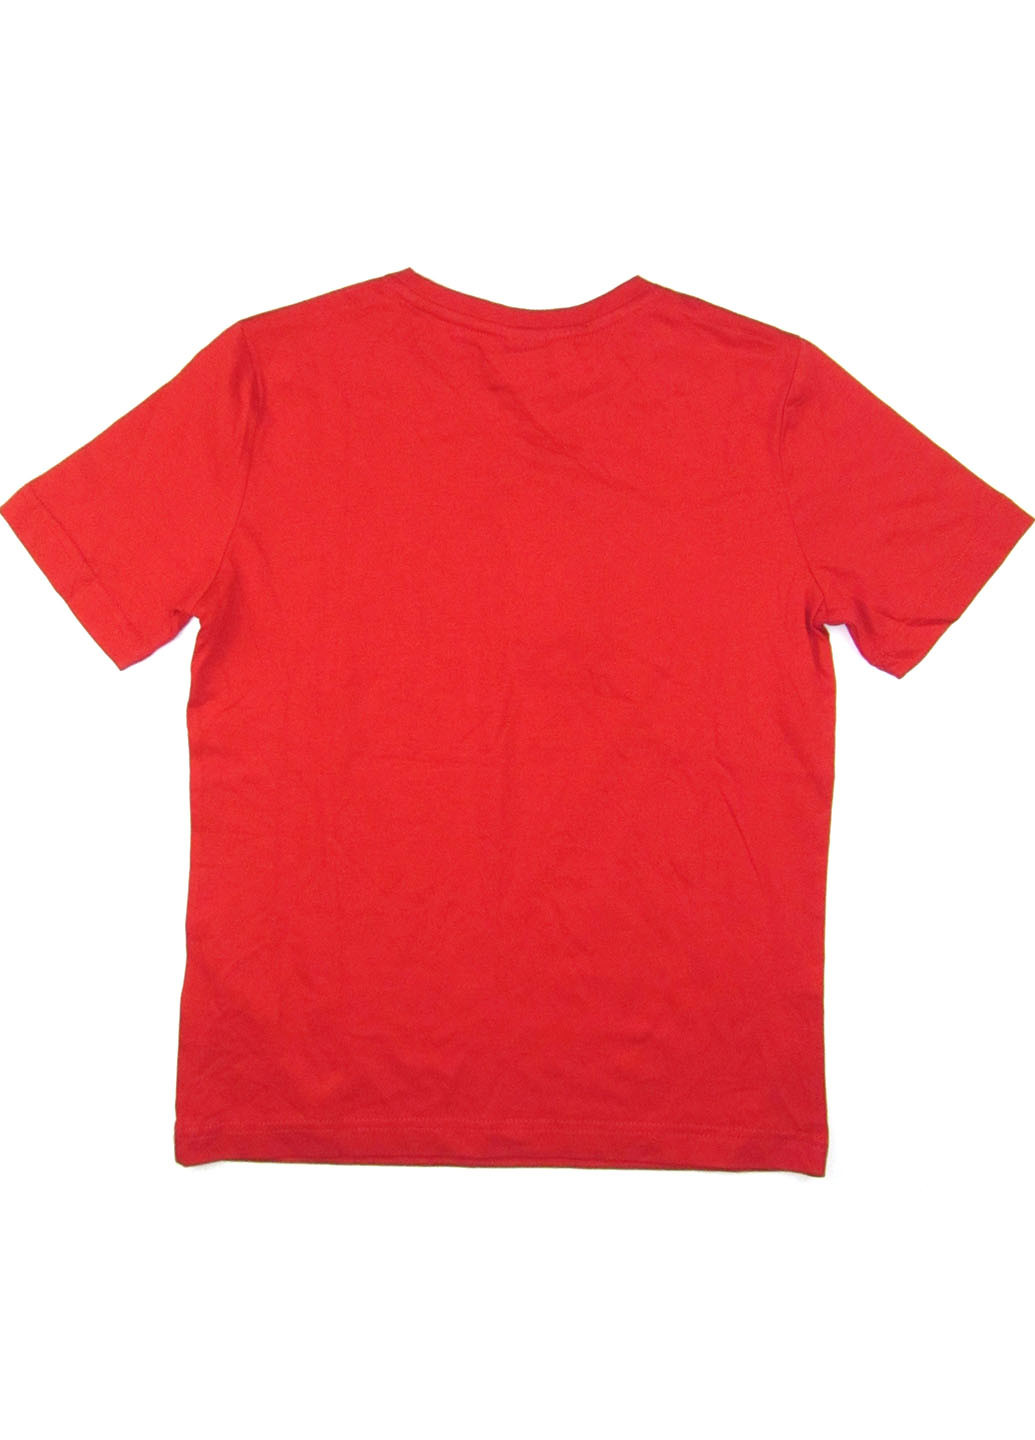 Красная летняя футболка S.Oliver